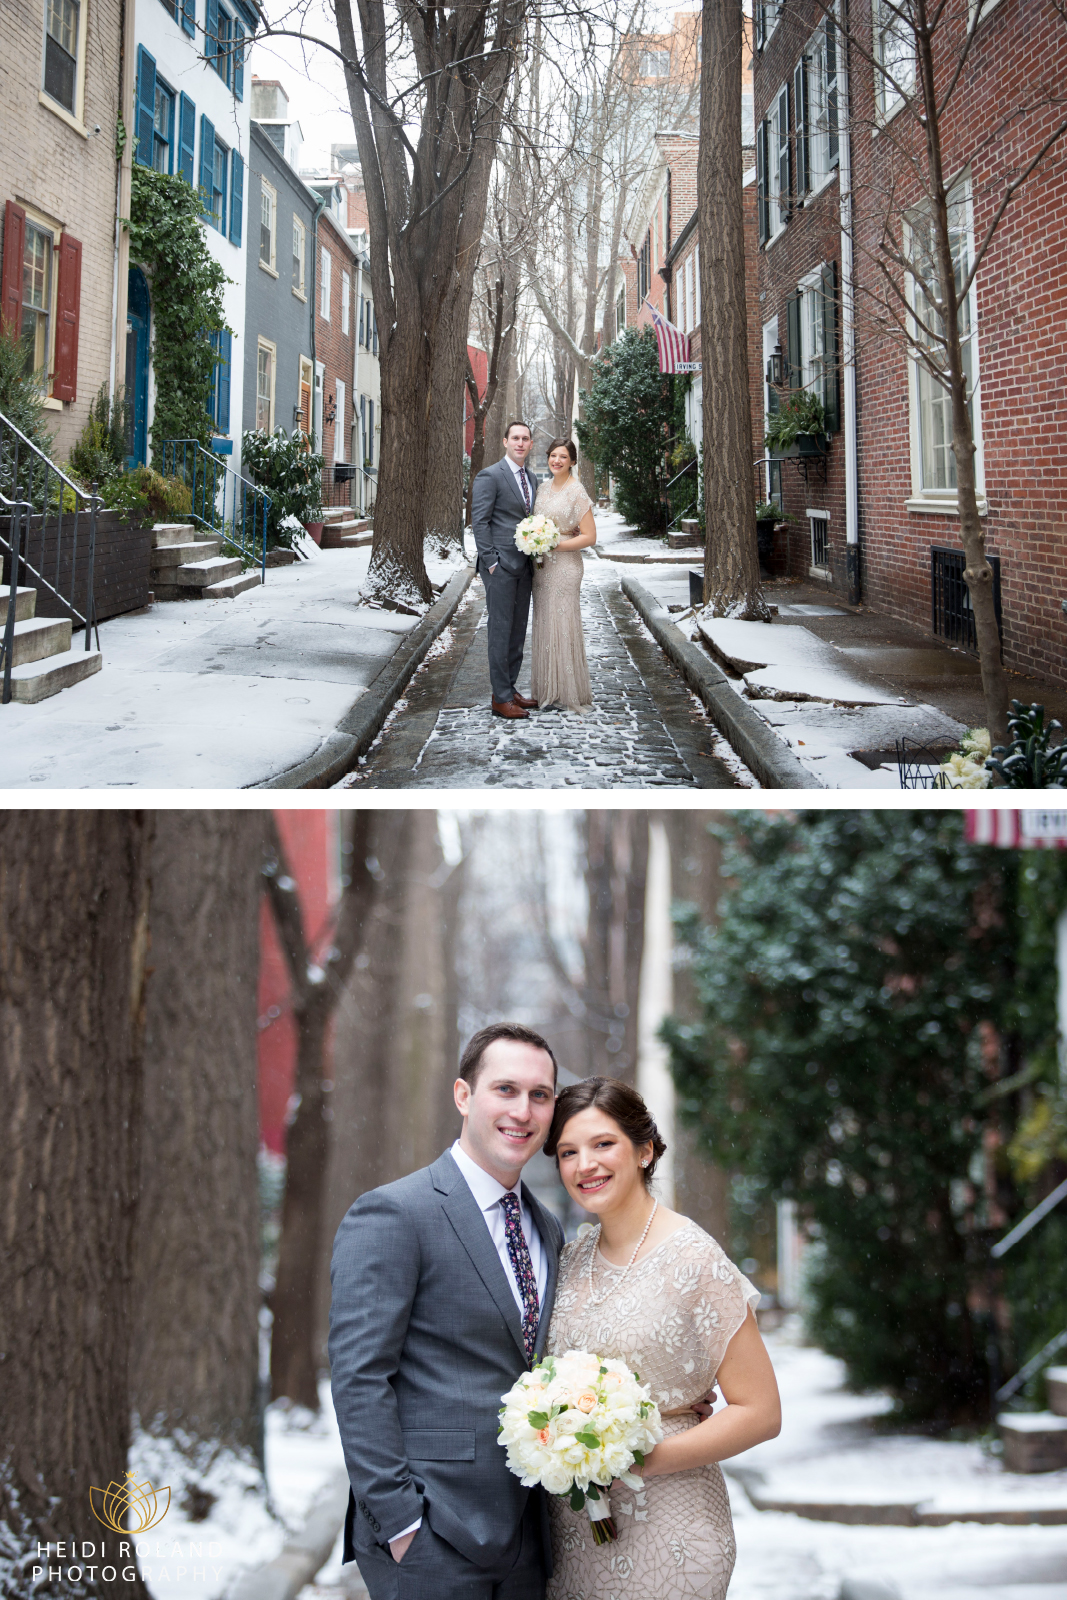 cobblestone alley wedding photos Philadelphia